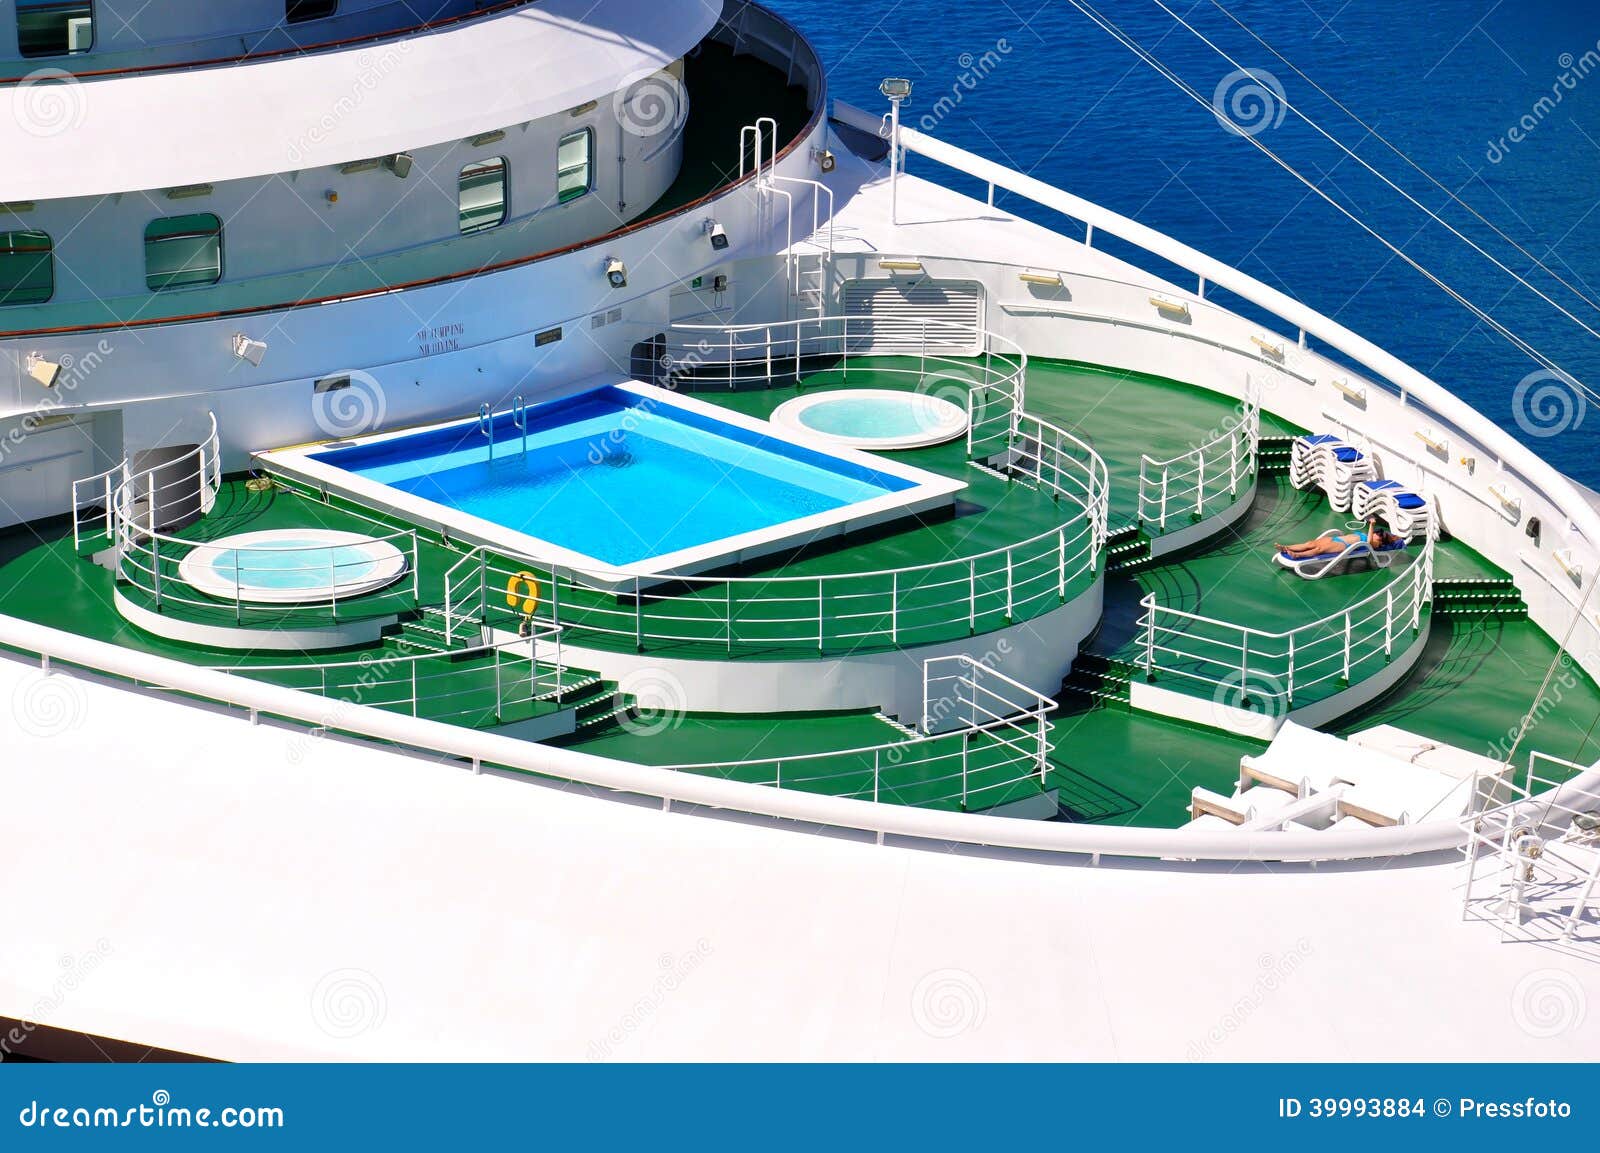 cruise crew deck